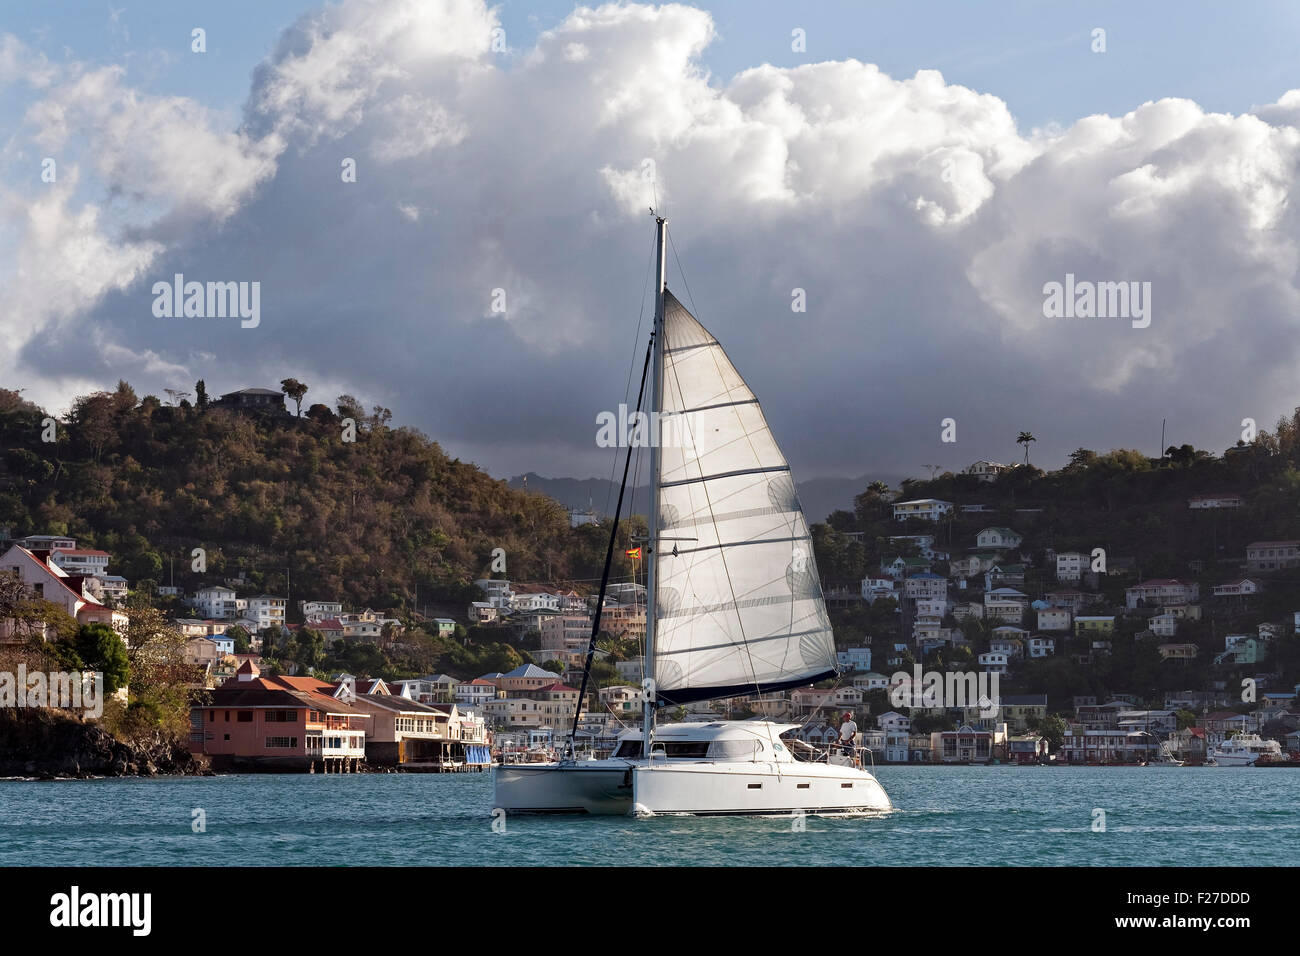 Catamaran Sailing in the Carnage, St. George, Grenada Stock Photo